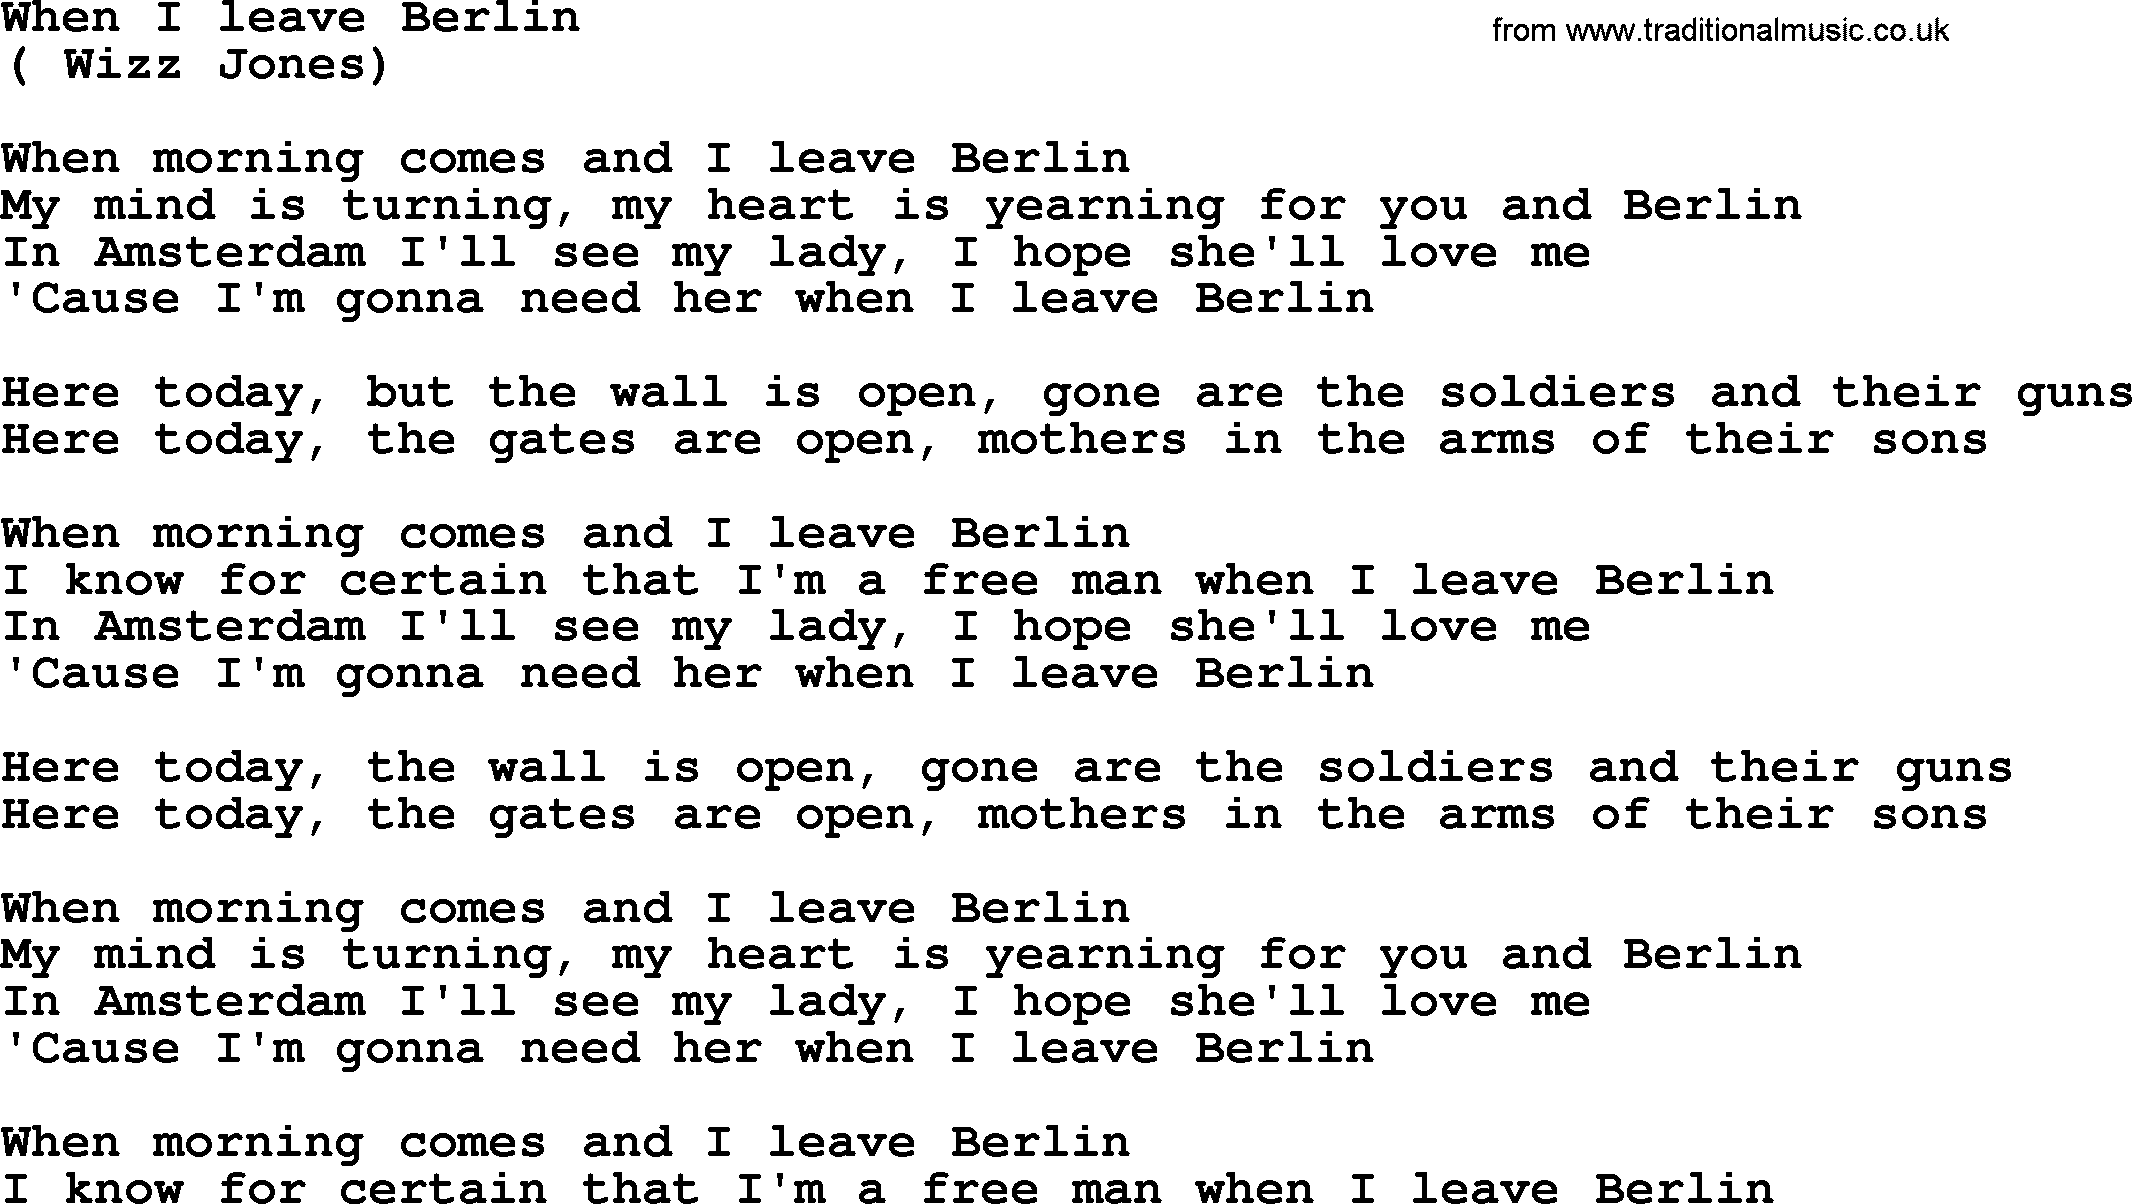 Bruce Springsteen song: When I Leave Berlin lyrics